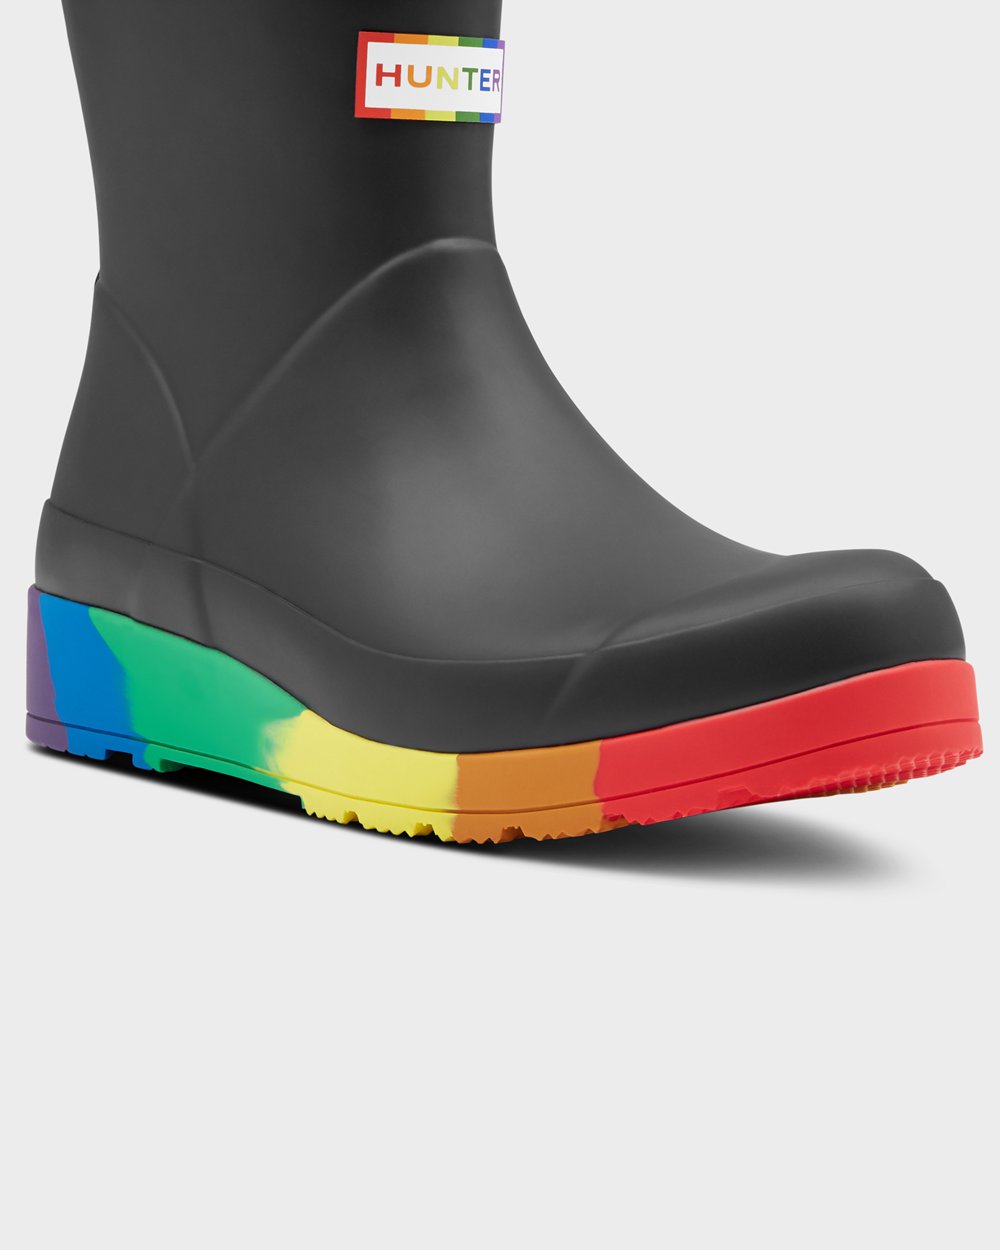 Womens Play Boots - Hunter Original Pride Flatform Rain (28BSZFQPU) - Black